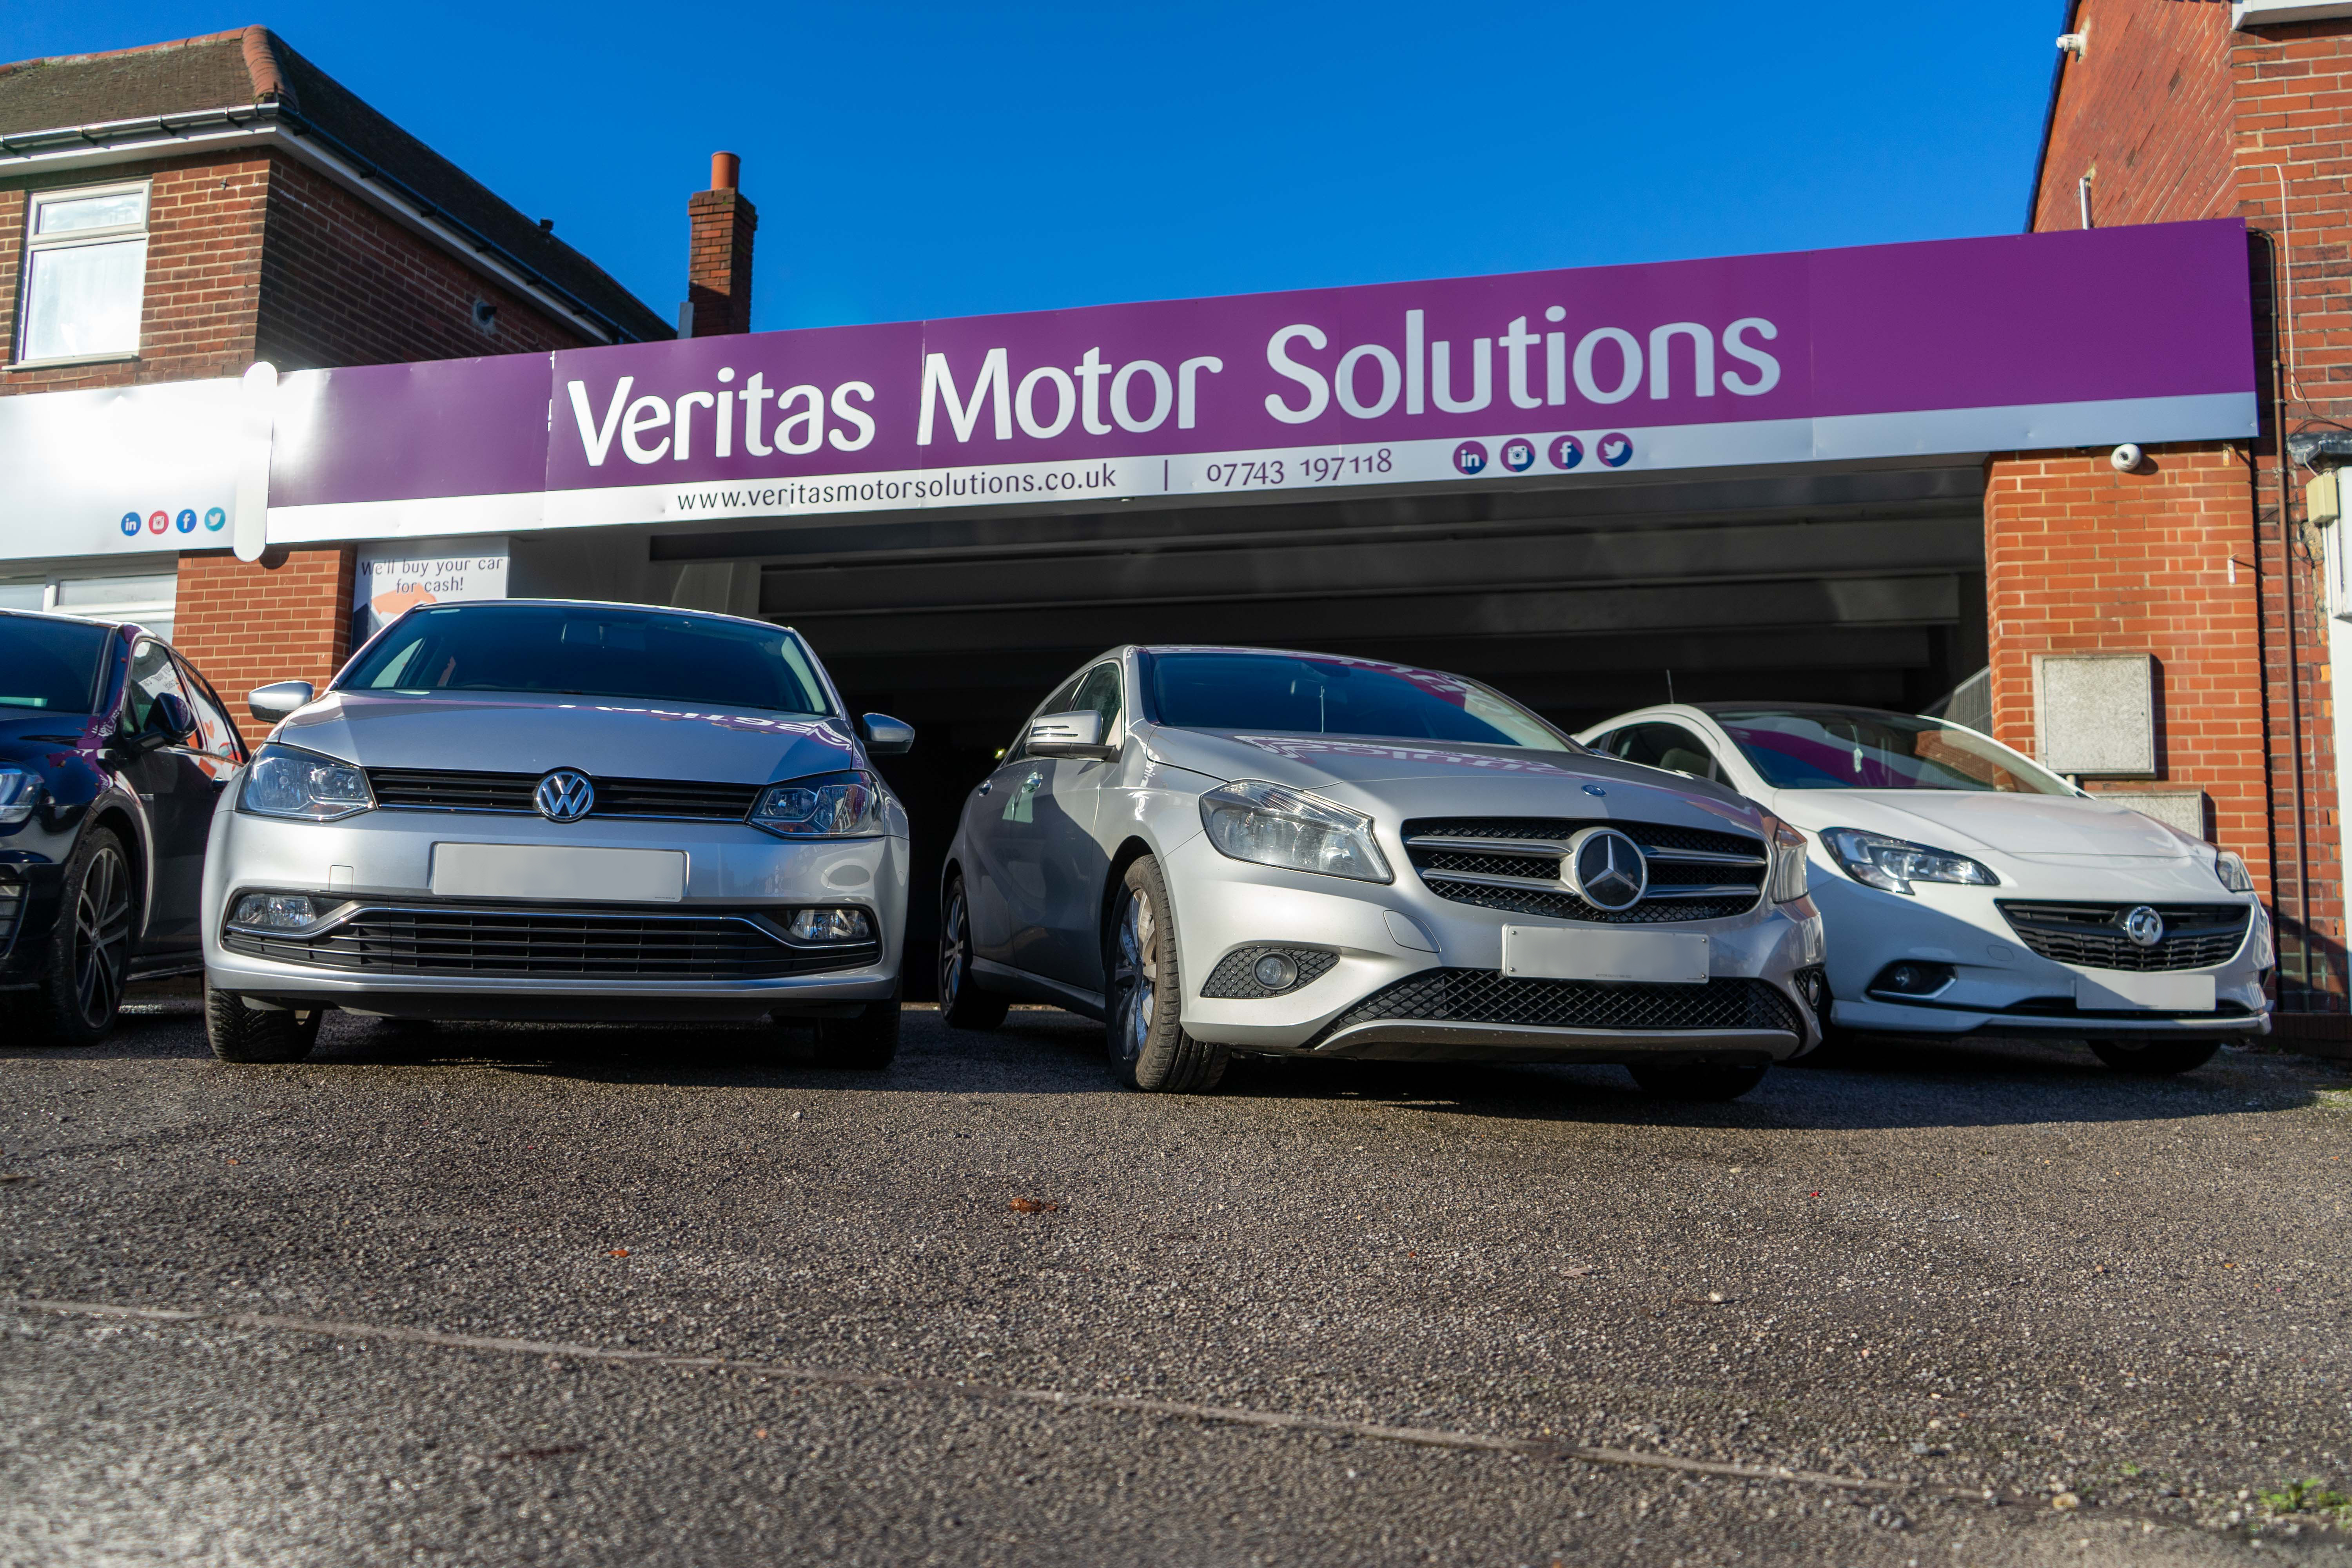 Veritas Motor Solutions